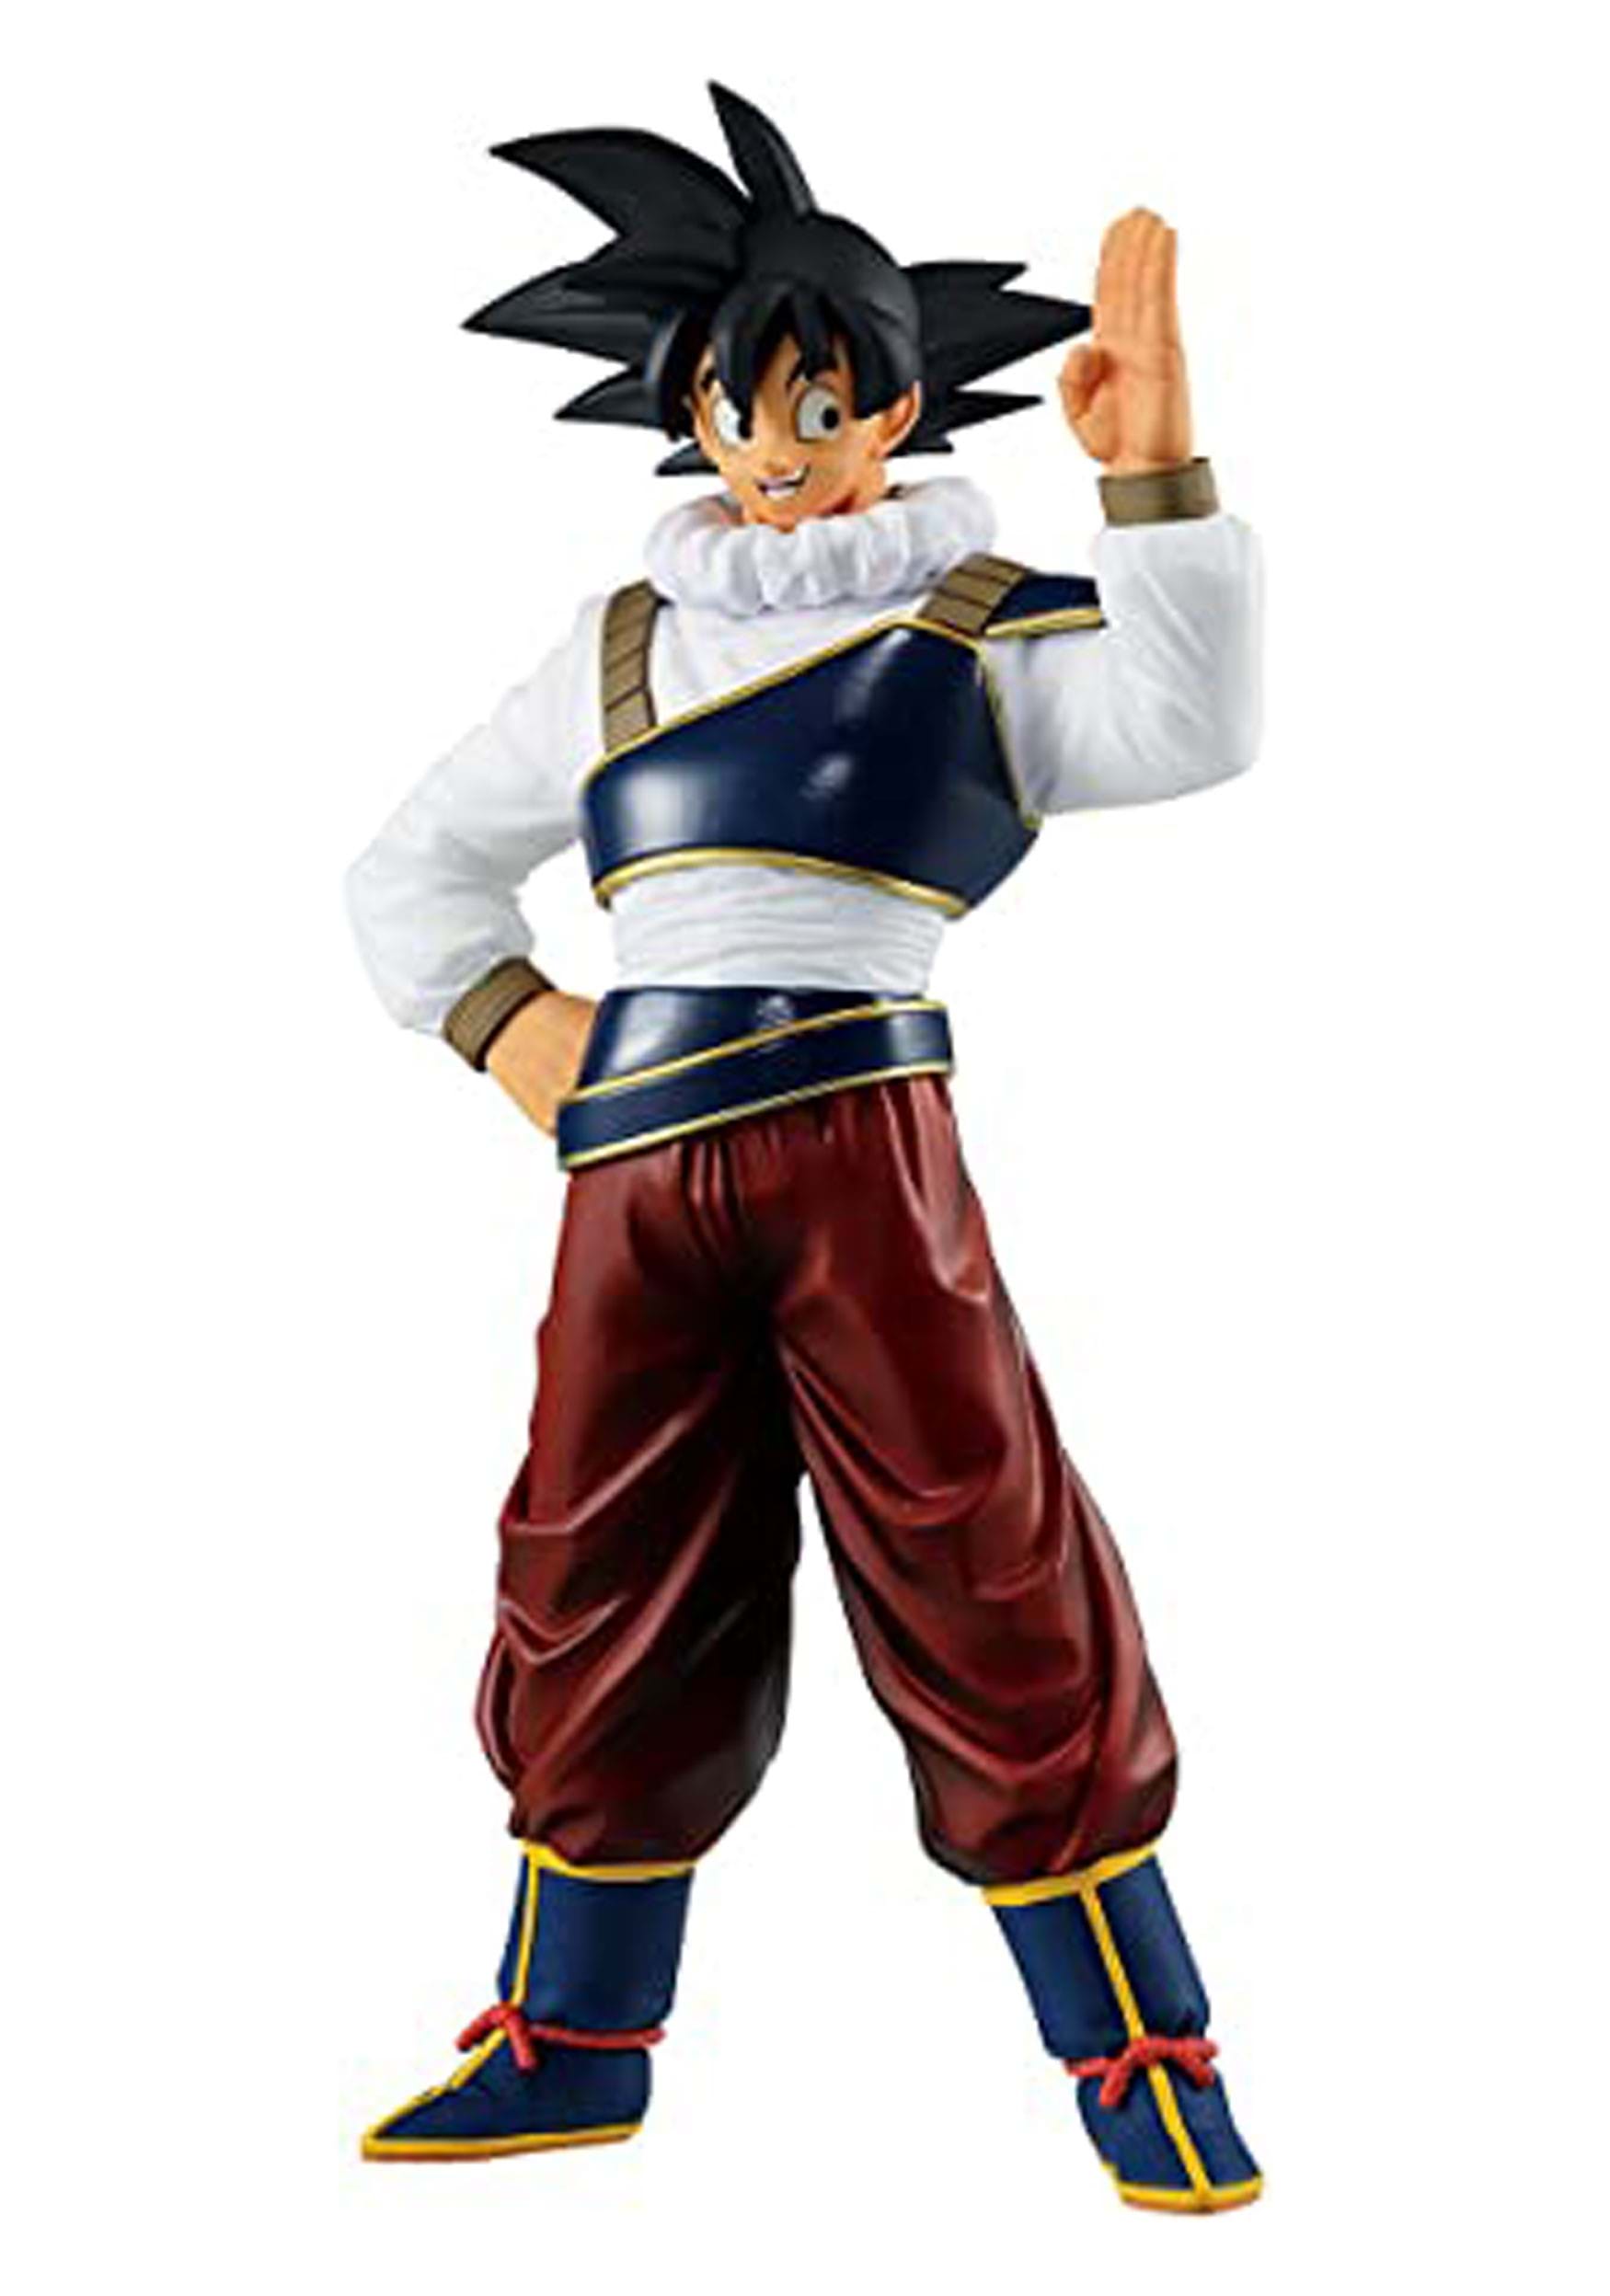  Dragon Ball Super Dragon Stars Battle Pack Super Saiyan Blue  Goku Vs Golden Frieza Action Figure 6 inches : Video Games